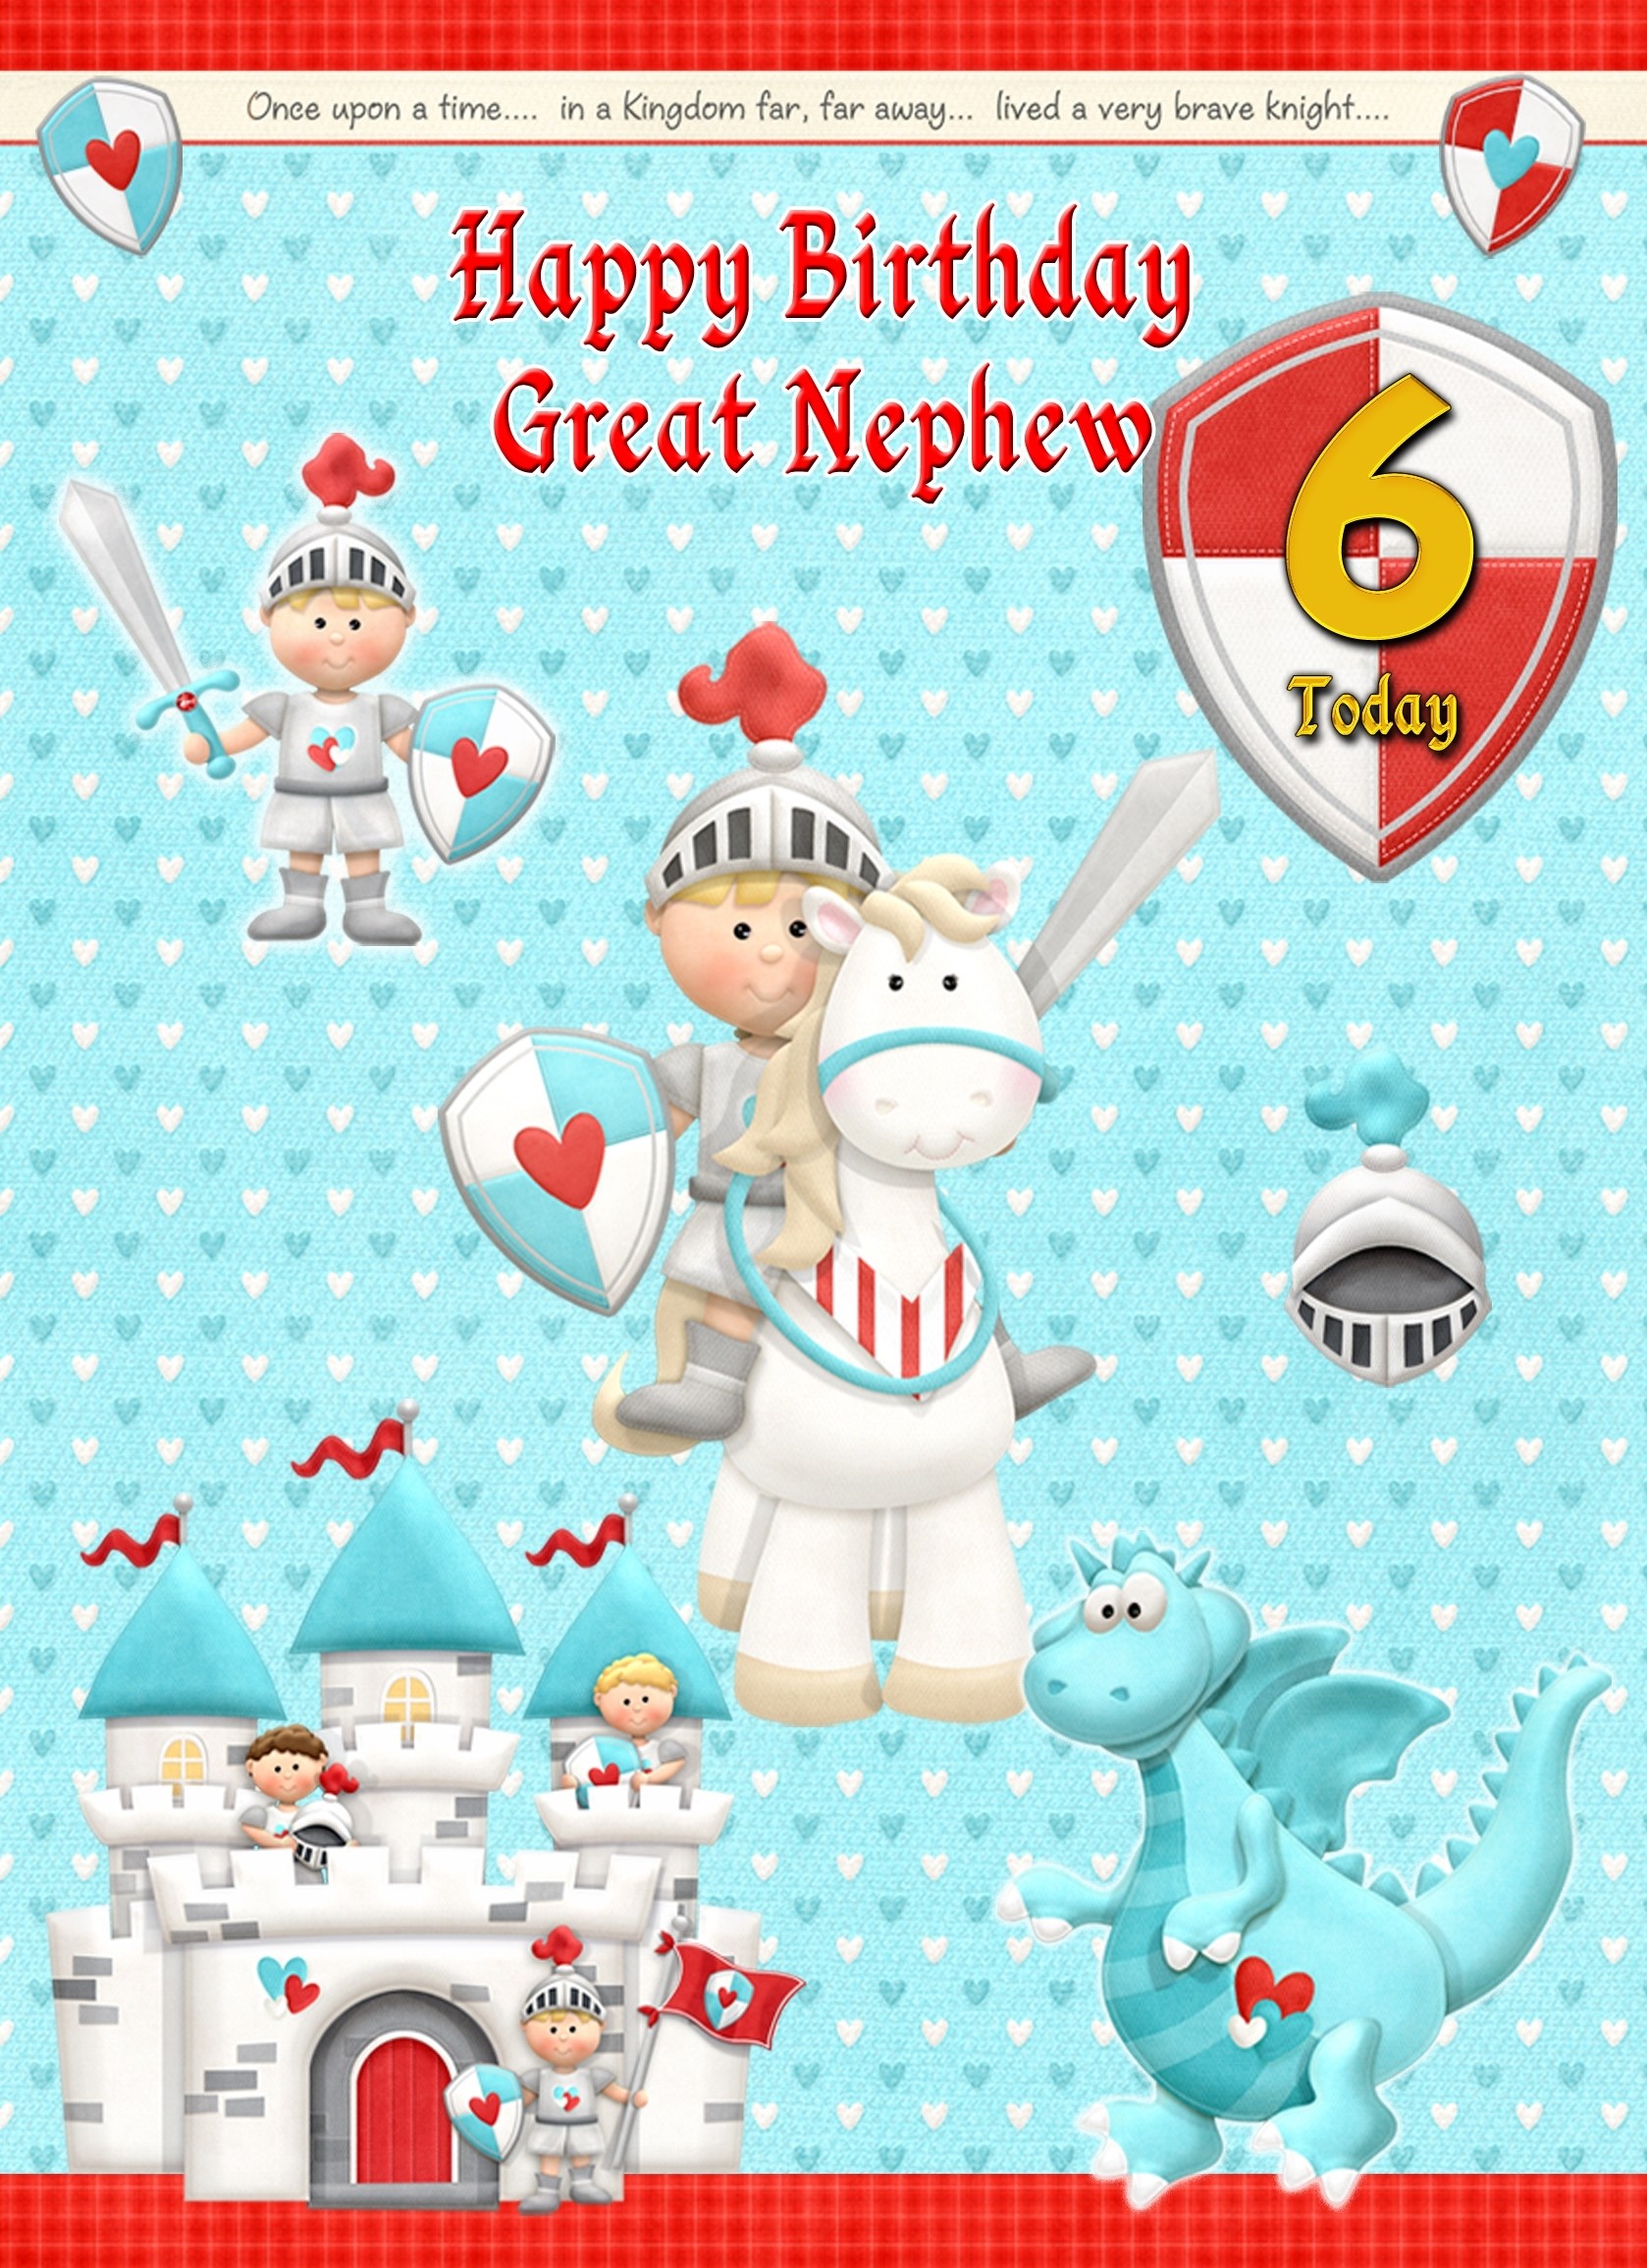 Kids 6th Birthday Hero Knight Cartoon Card for Great Nephew